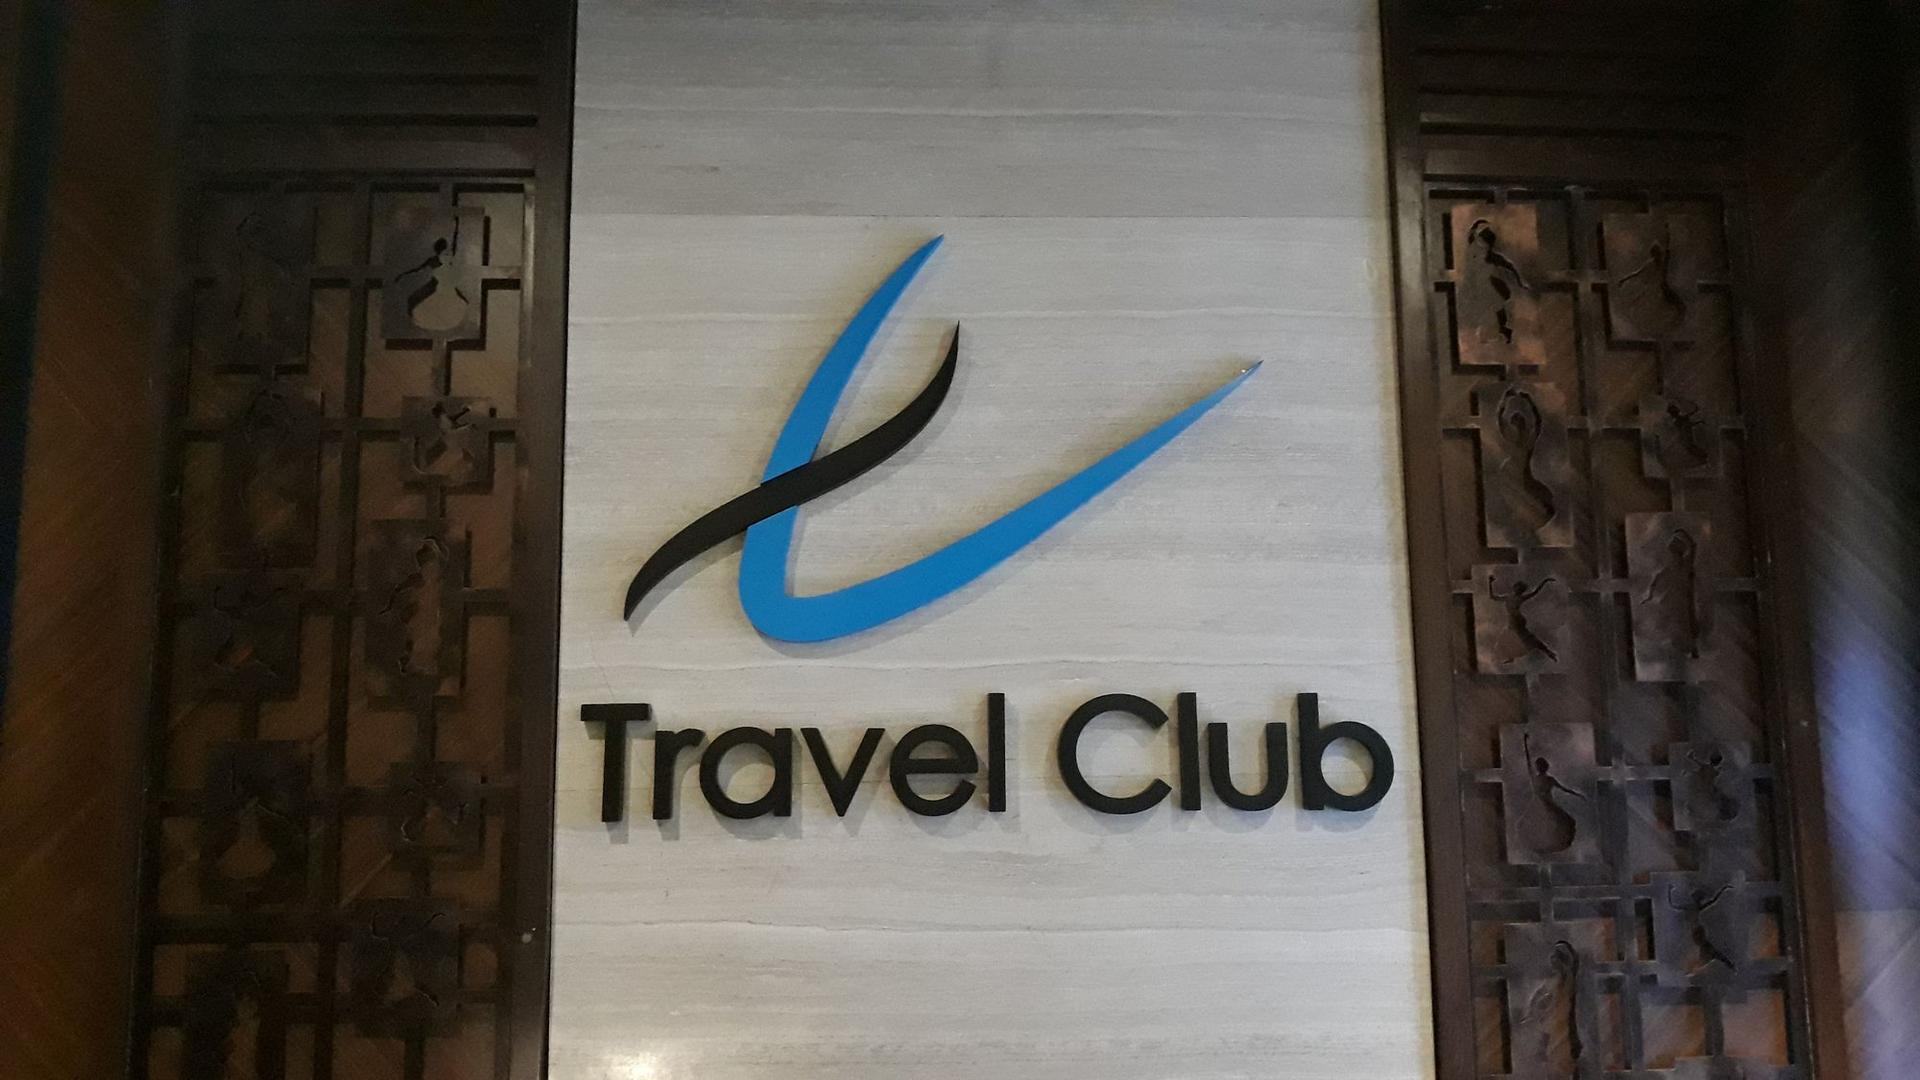 TFS Travel Club Lounge image 17 of 25